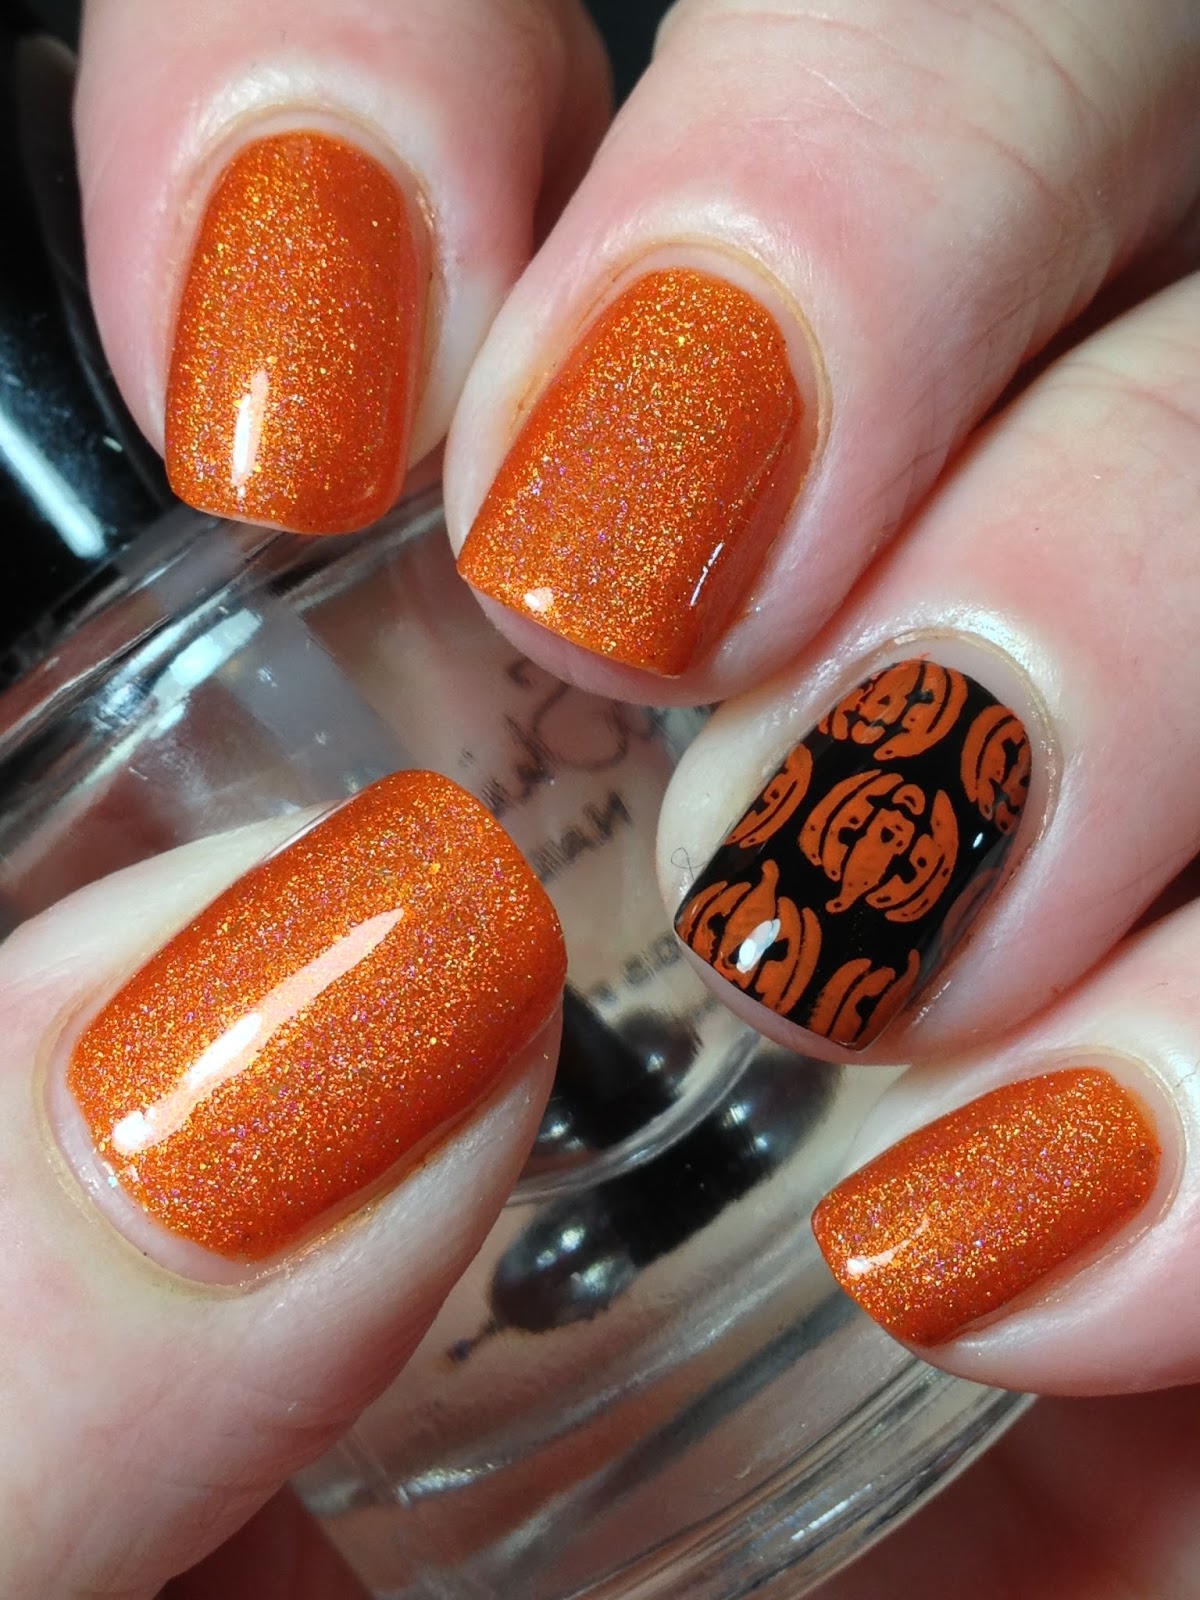 Canadian Nail Fanatic: Cute Halloween Pumpkins!